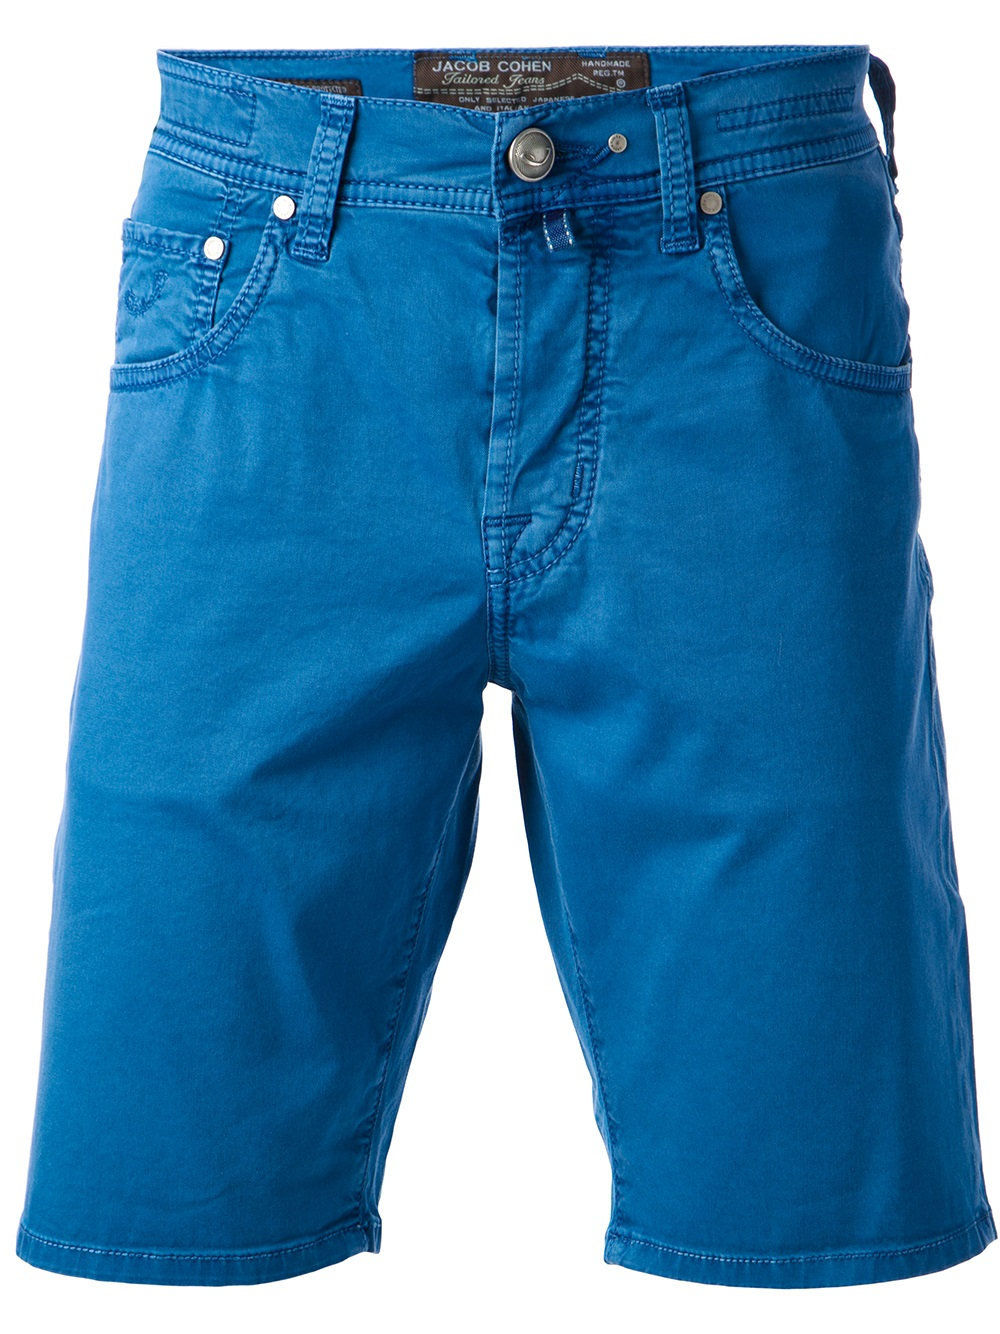 Lyst - Jacob Cohen Denim Bermuda Shorts in Blue for Men